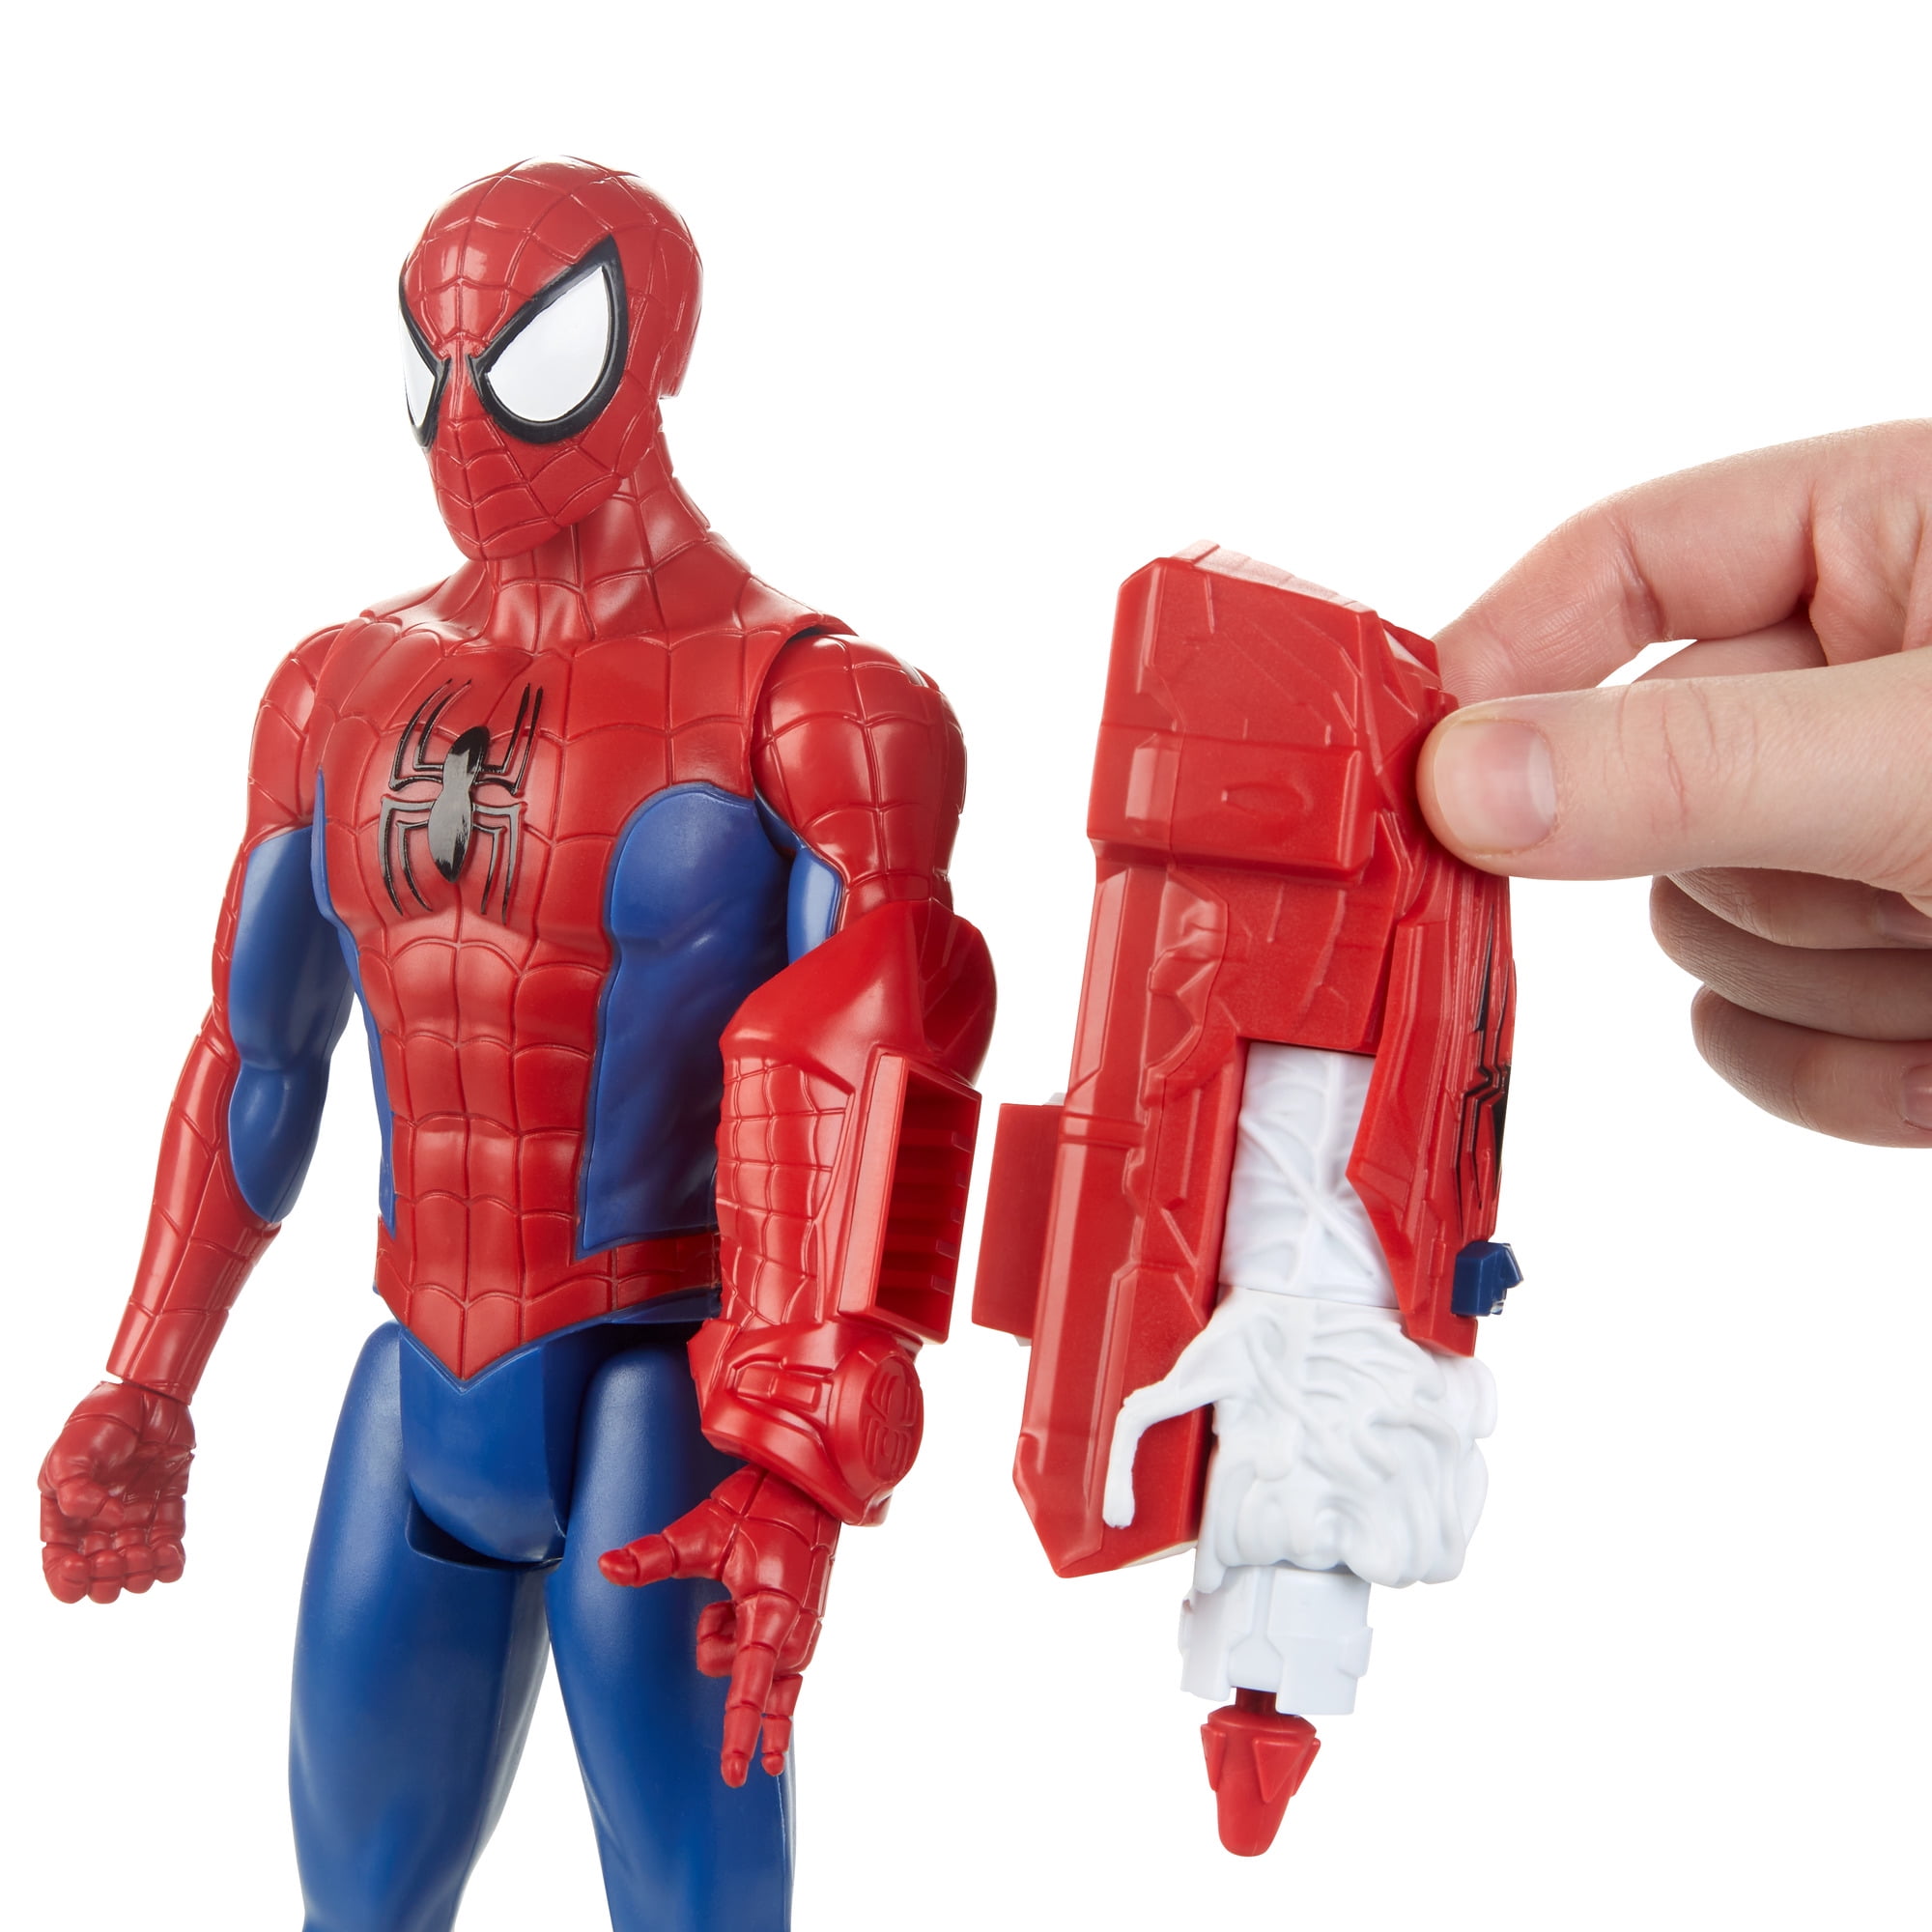 Spiderman Titan 30cm Figurine - N/A - Kiabi - 24.00€